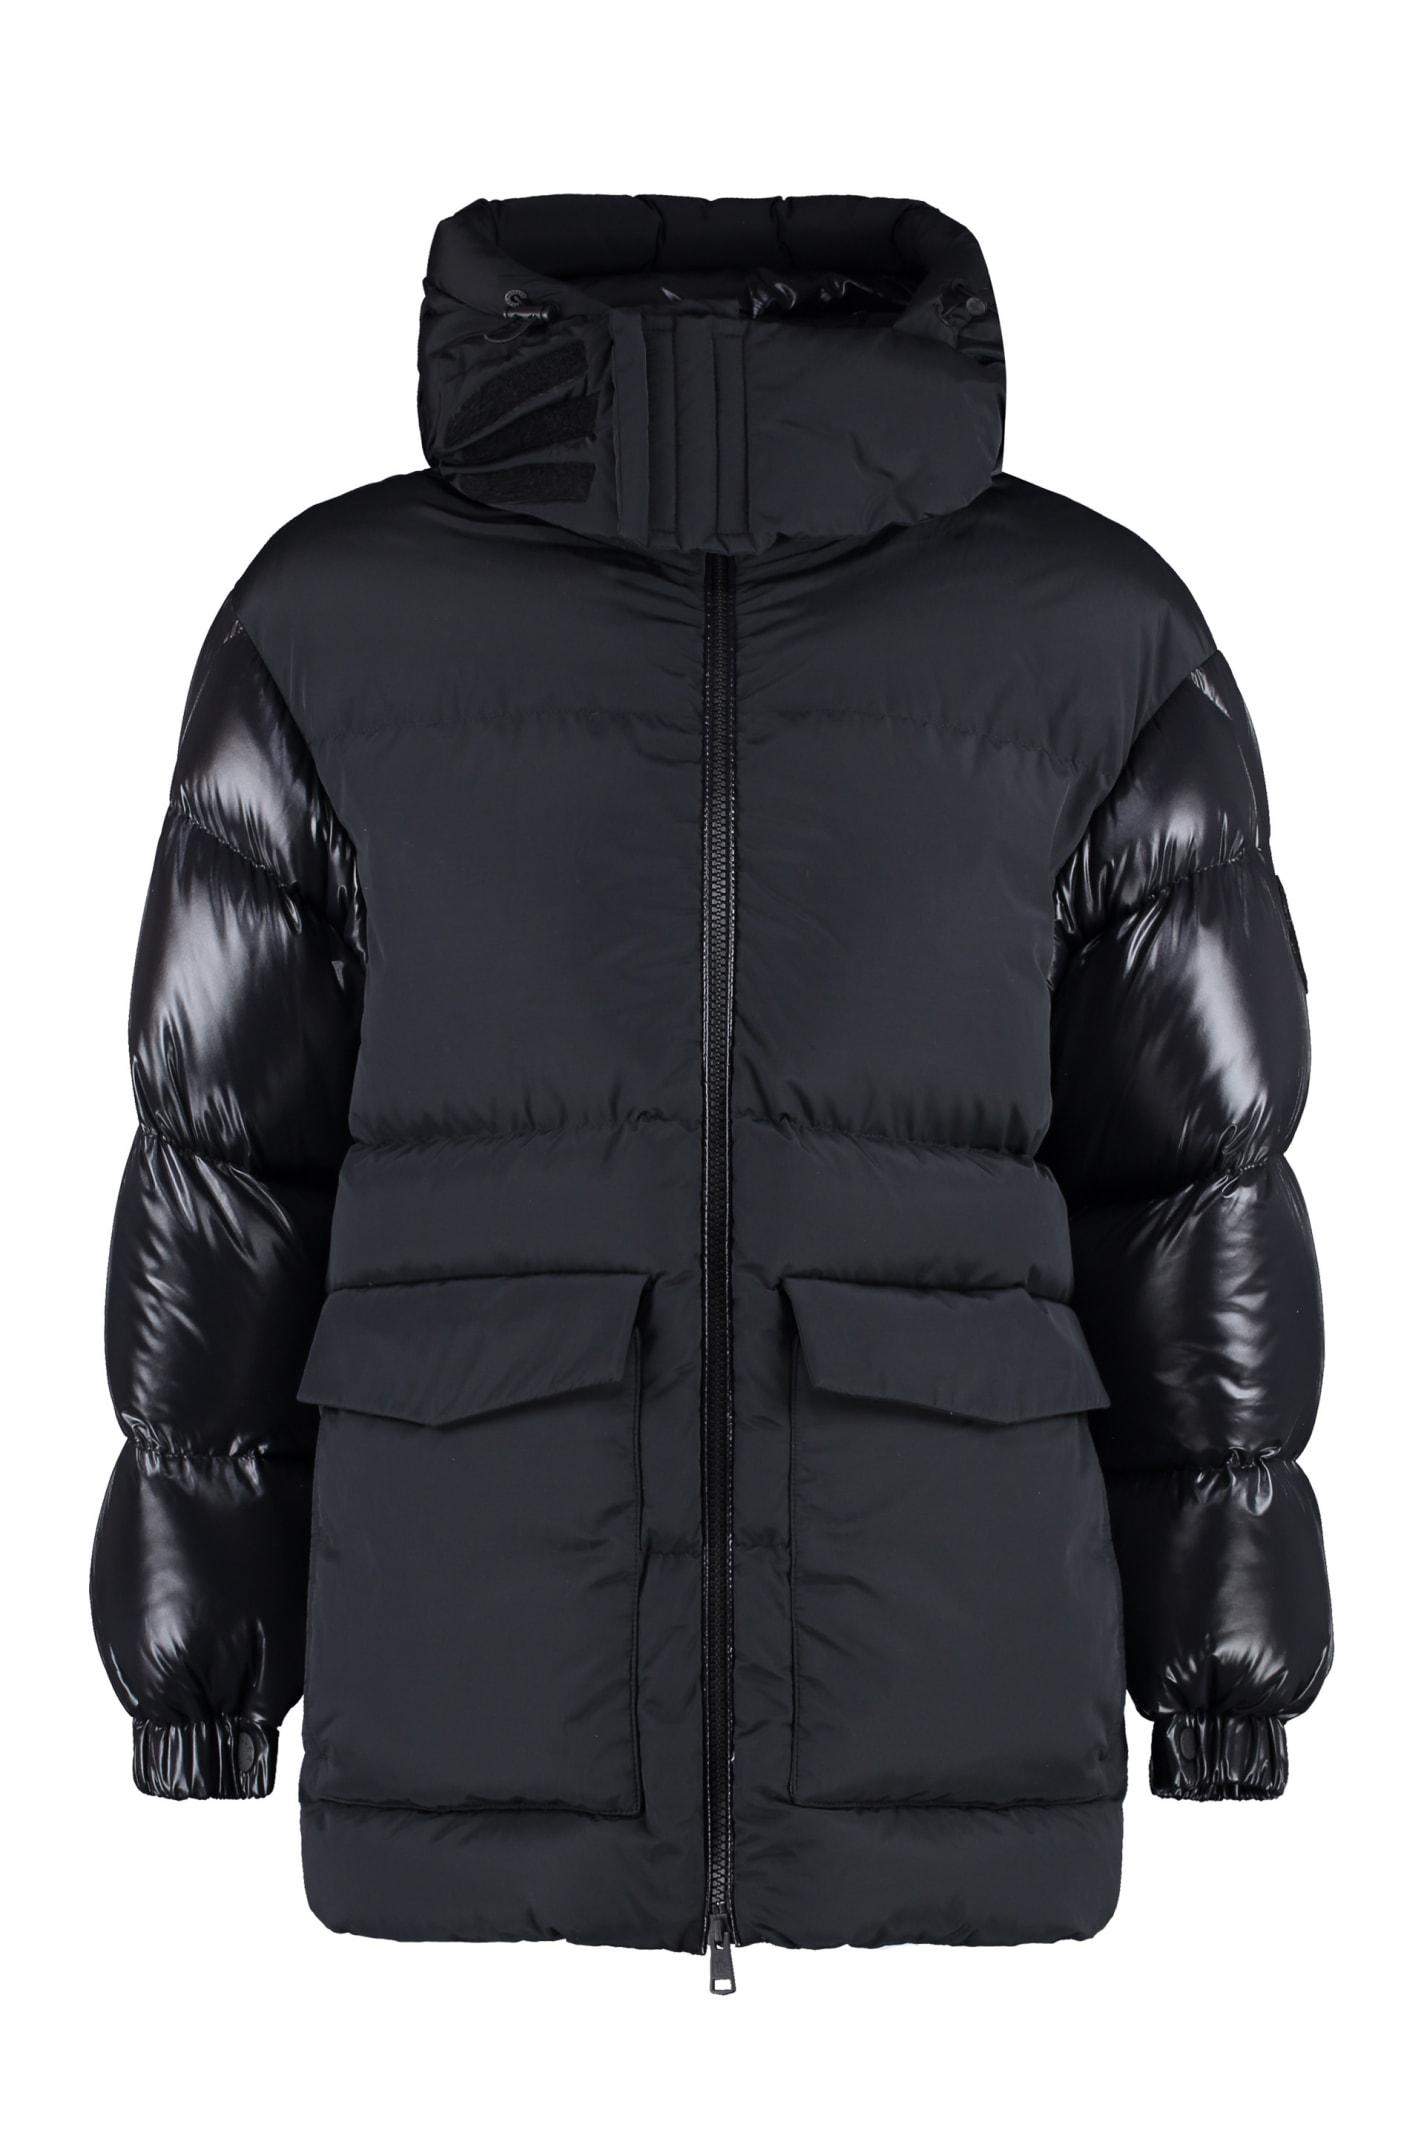 Moncler Genius 2 Moncler 1952 - Bressay Hooded Full-zip Down Jacket in  Black for Men | Lyst